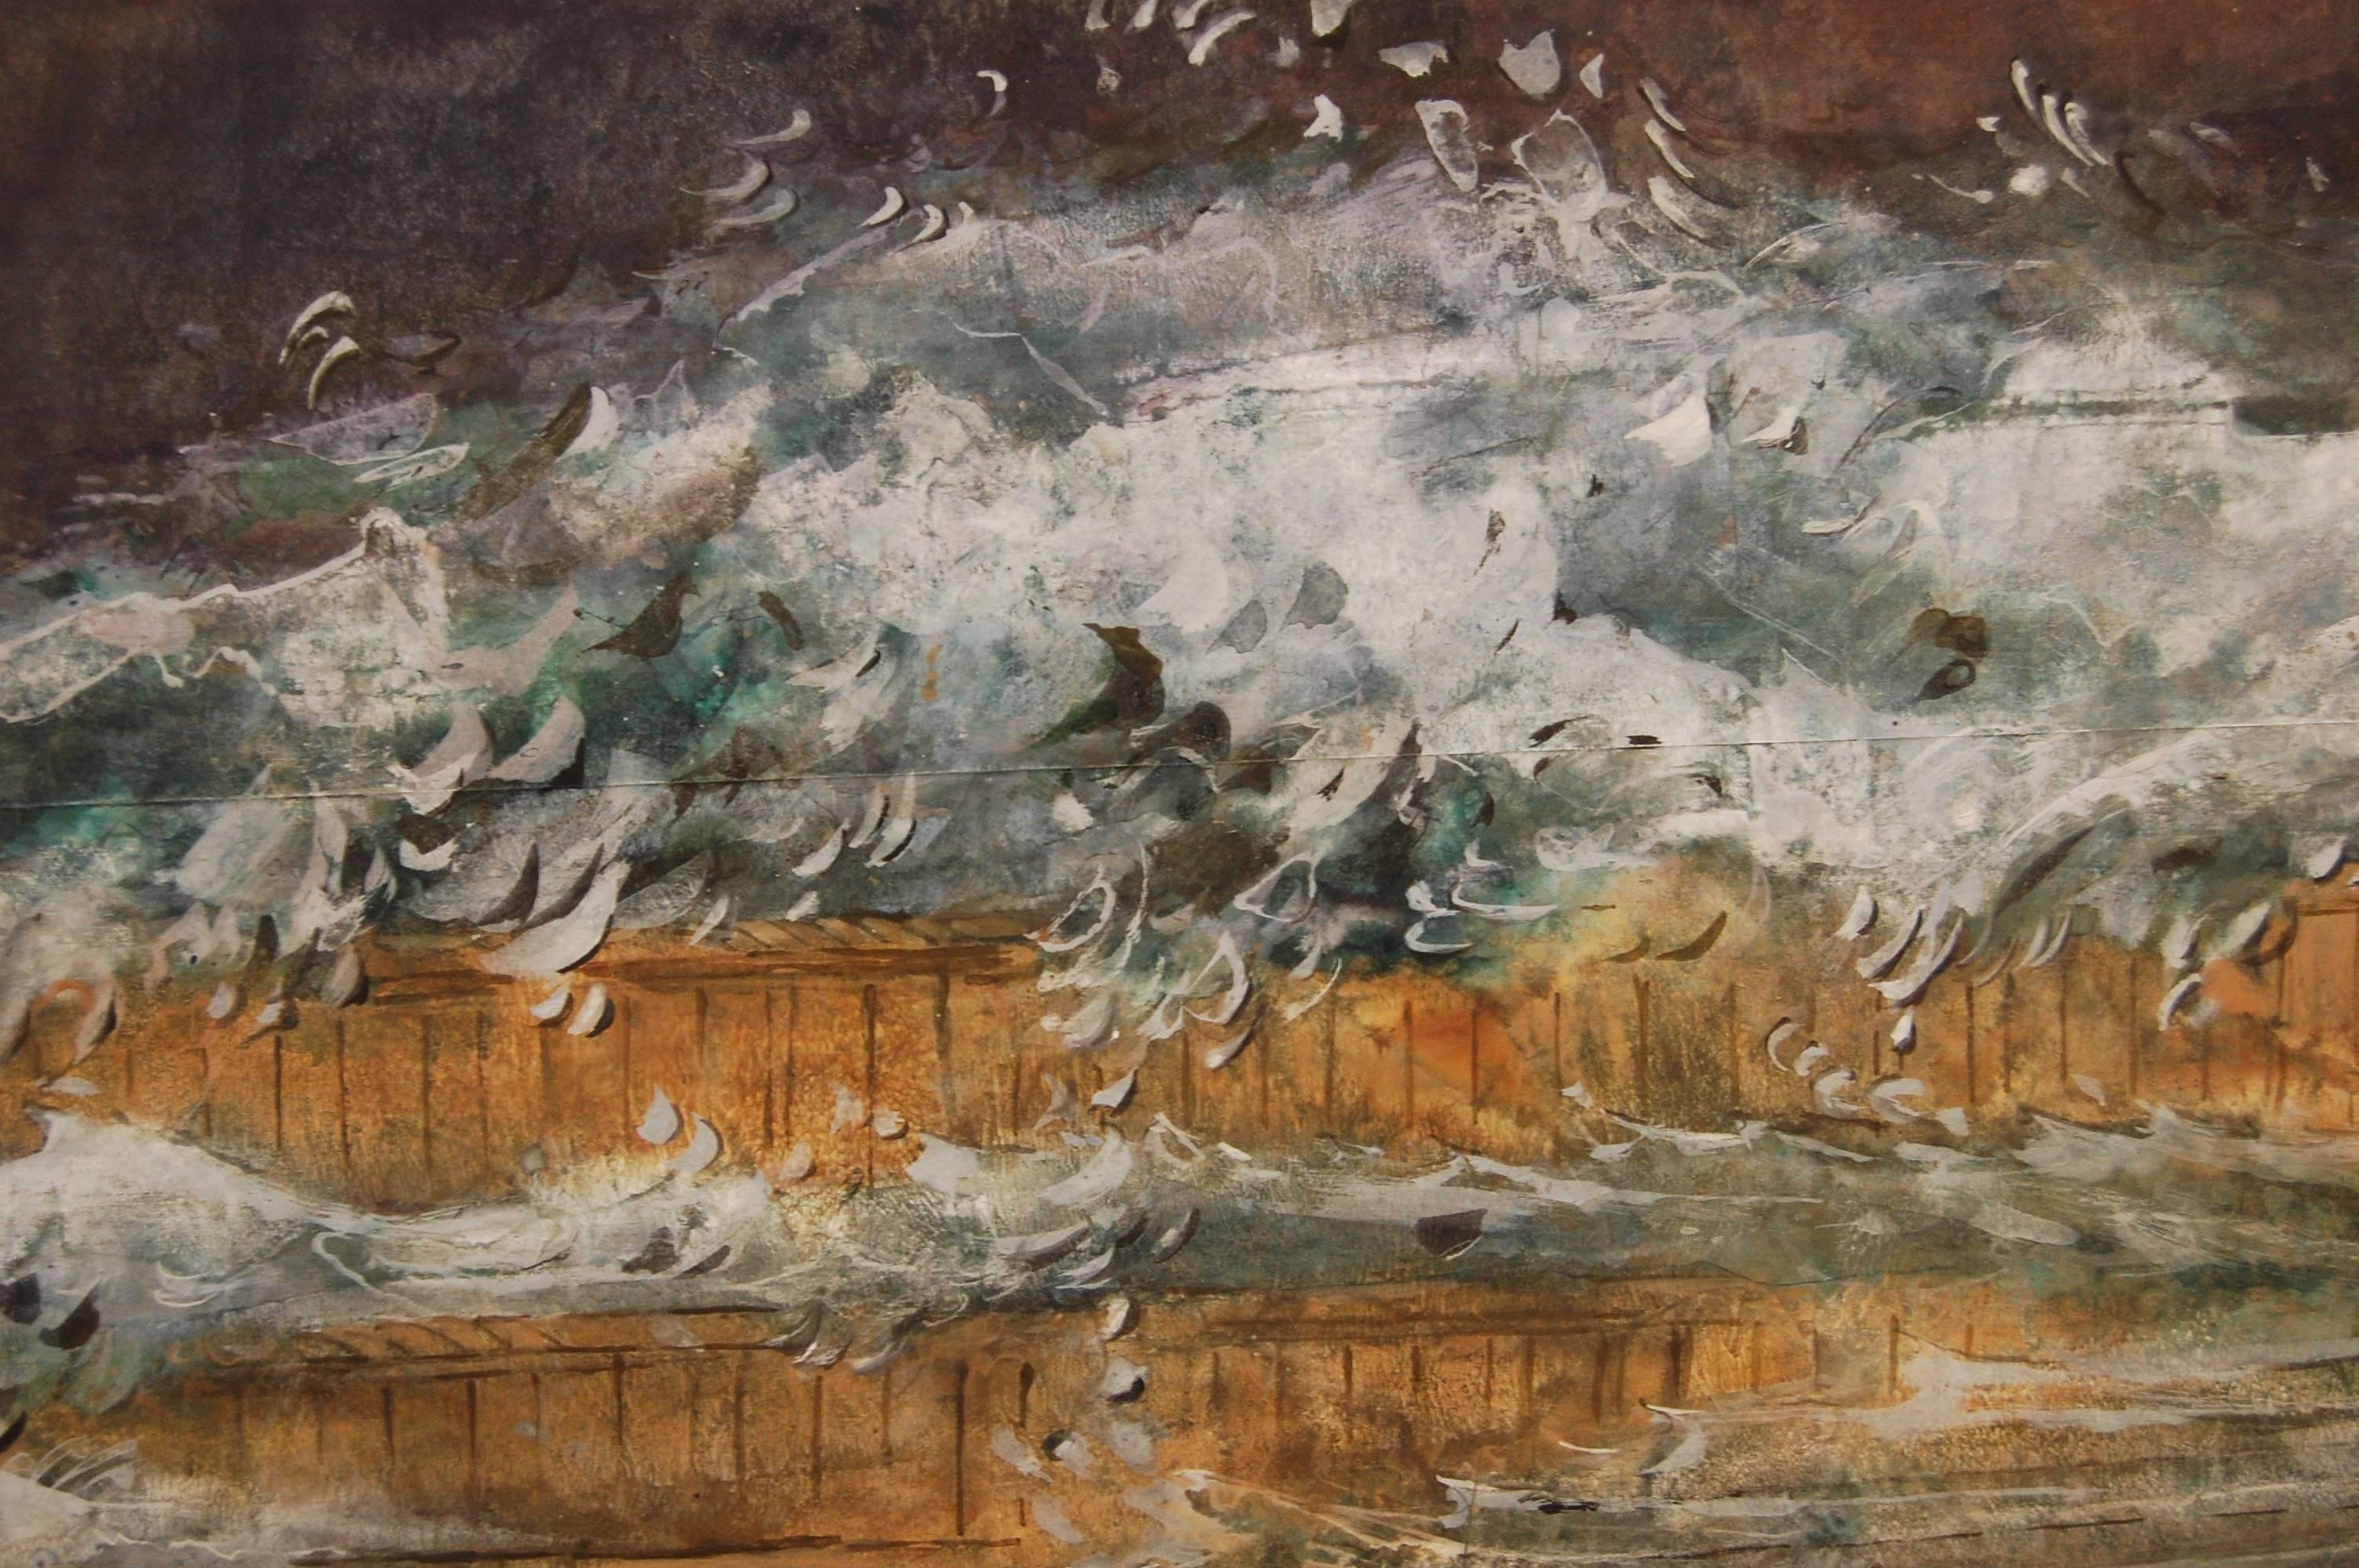  Wave  - Modern Painting by Ikusen